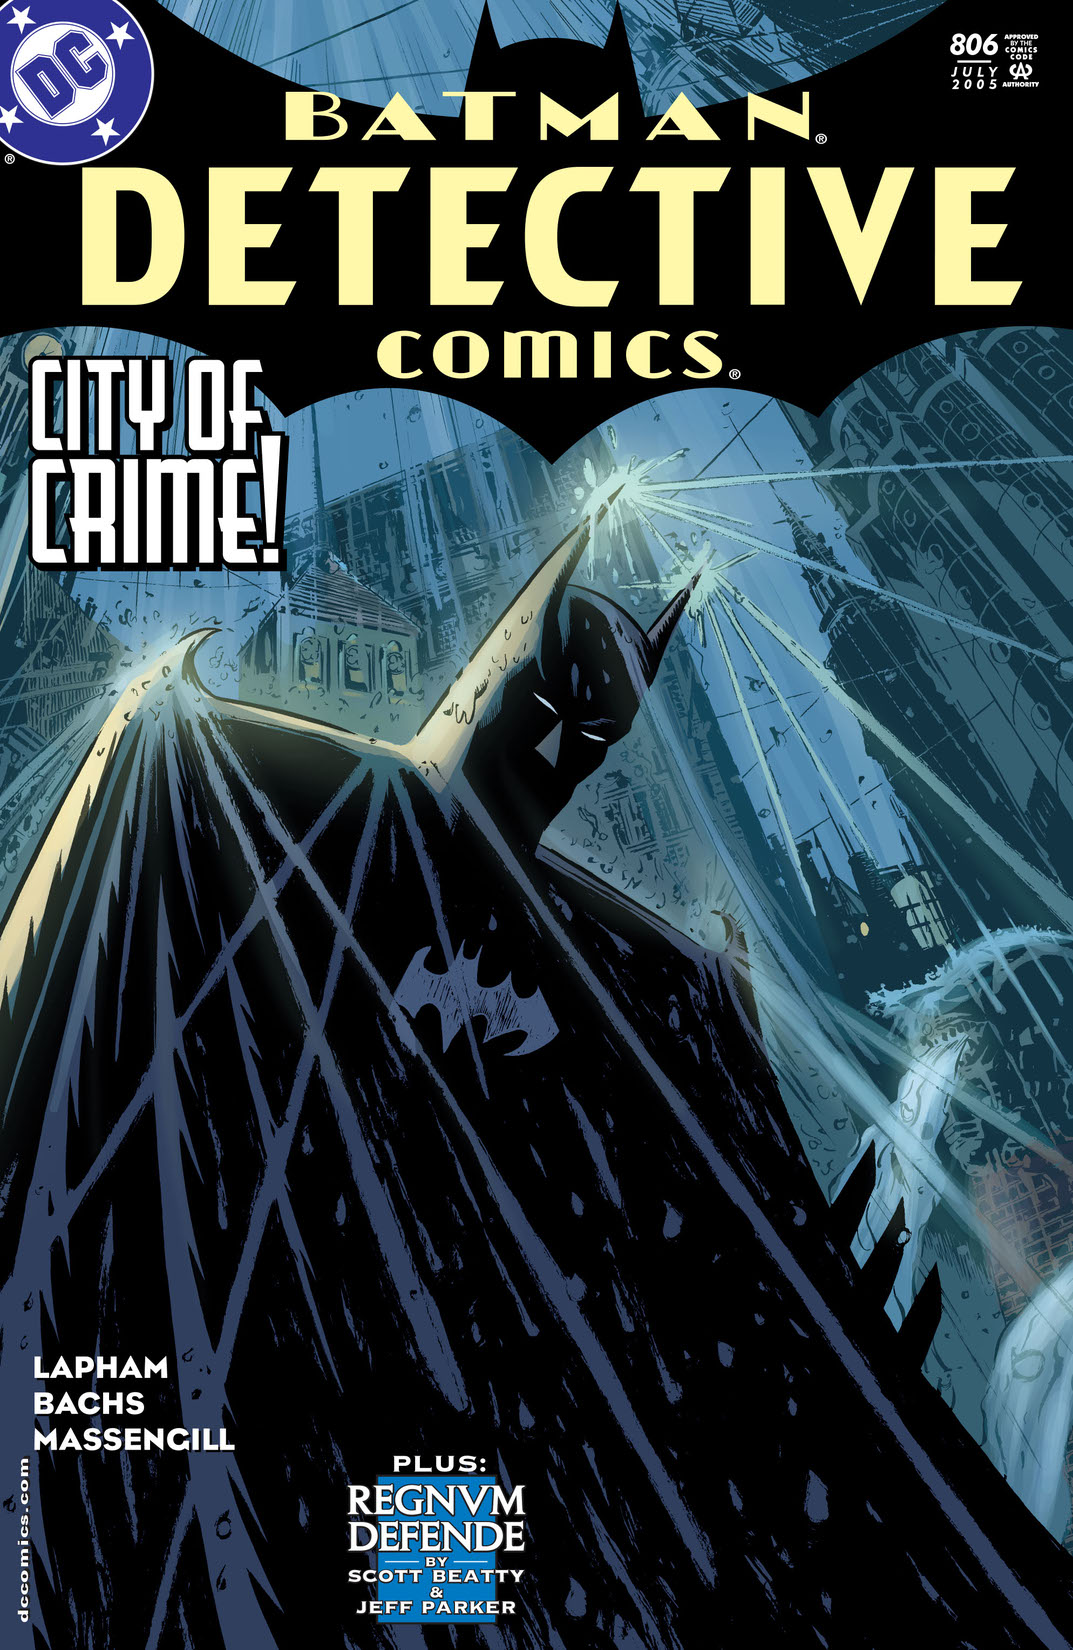 Detective Comics (1937-) #806 preview images